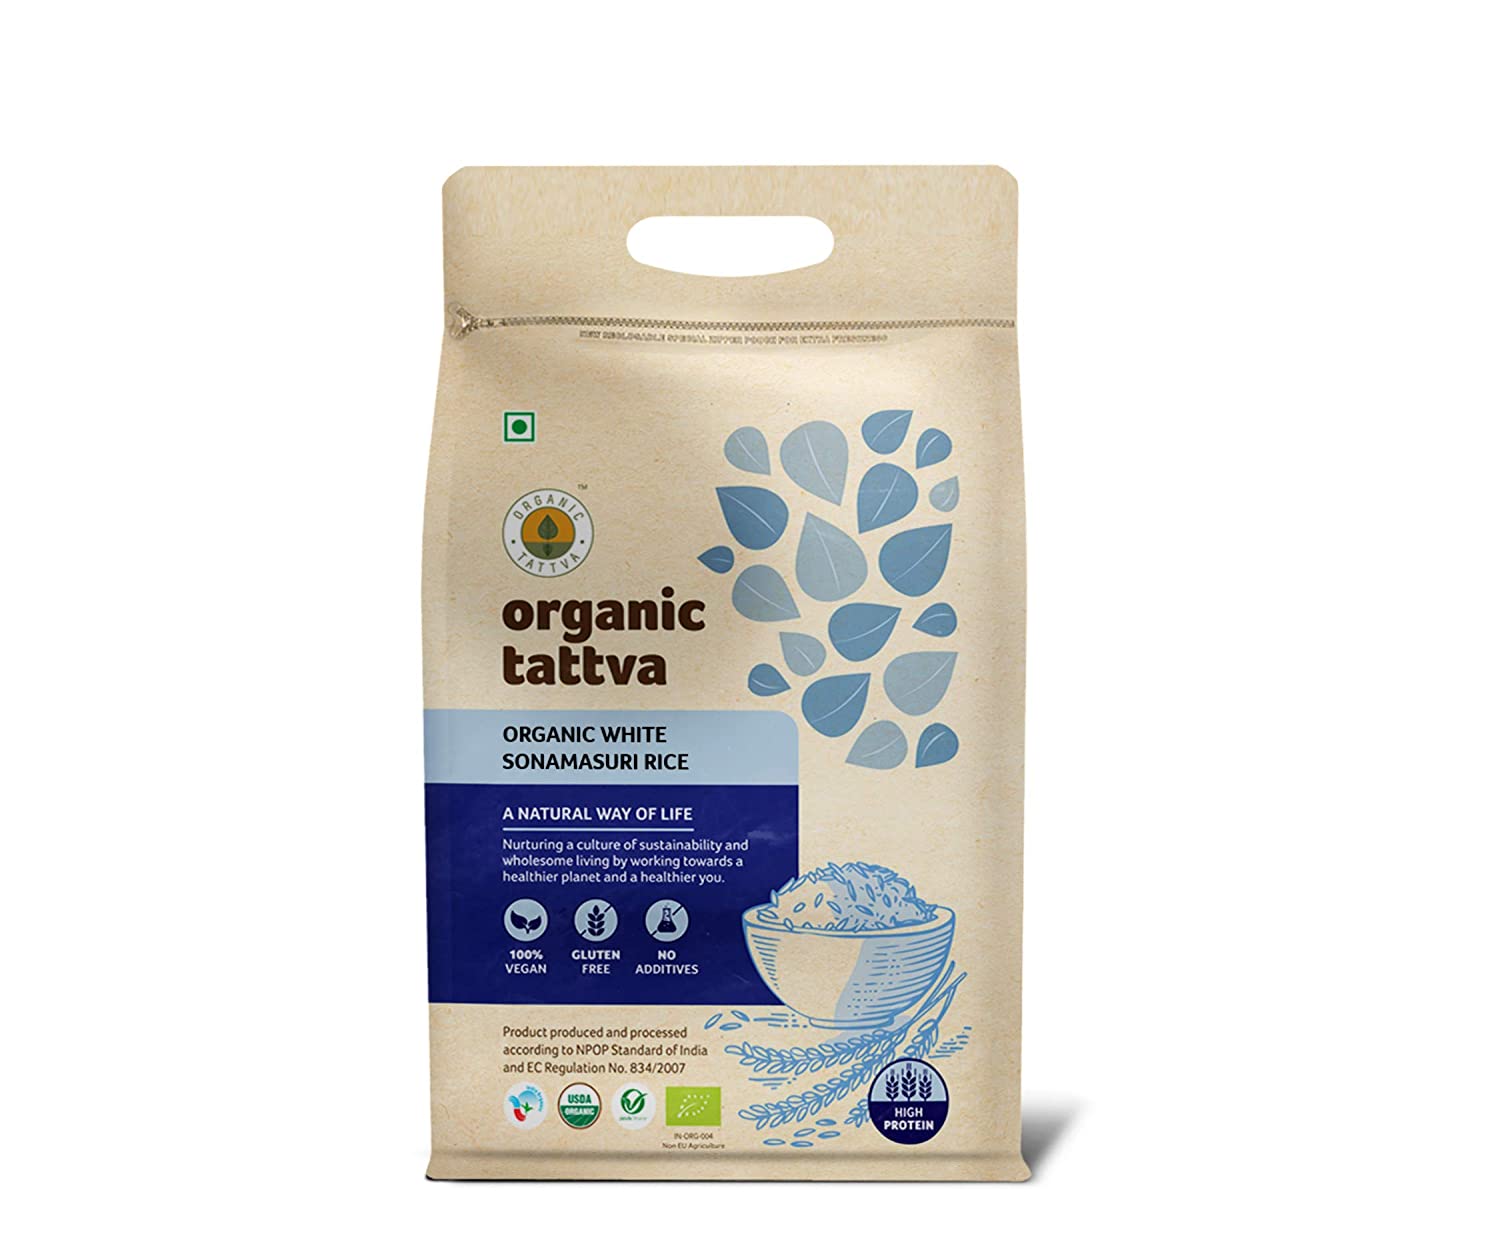 ORGANIC TATTAVA Organic White Sonamasuri Rice, 5Kg - Organic, Vegan, Gluten Free